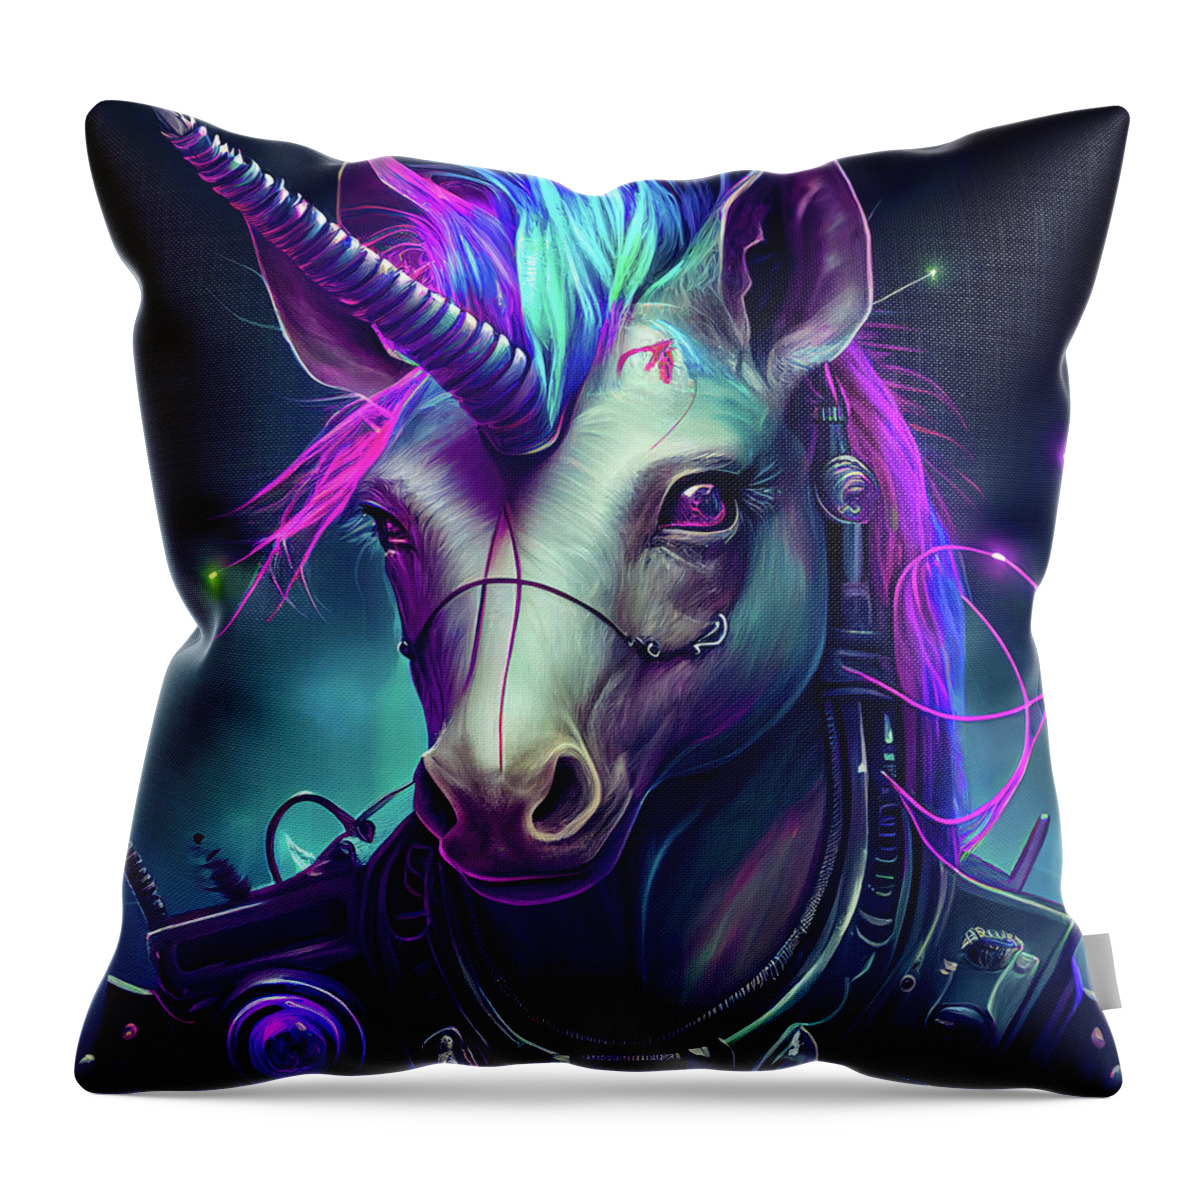 Unicorn Throw Pillow featuring the digital art Cyberpunk Unicorn Portrait 01 by Matthias Hauser